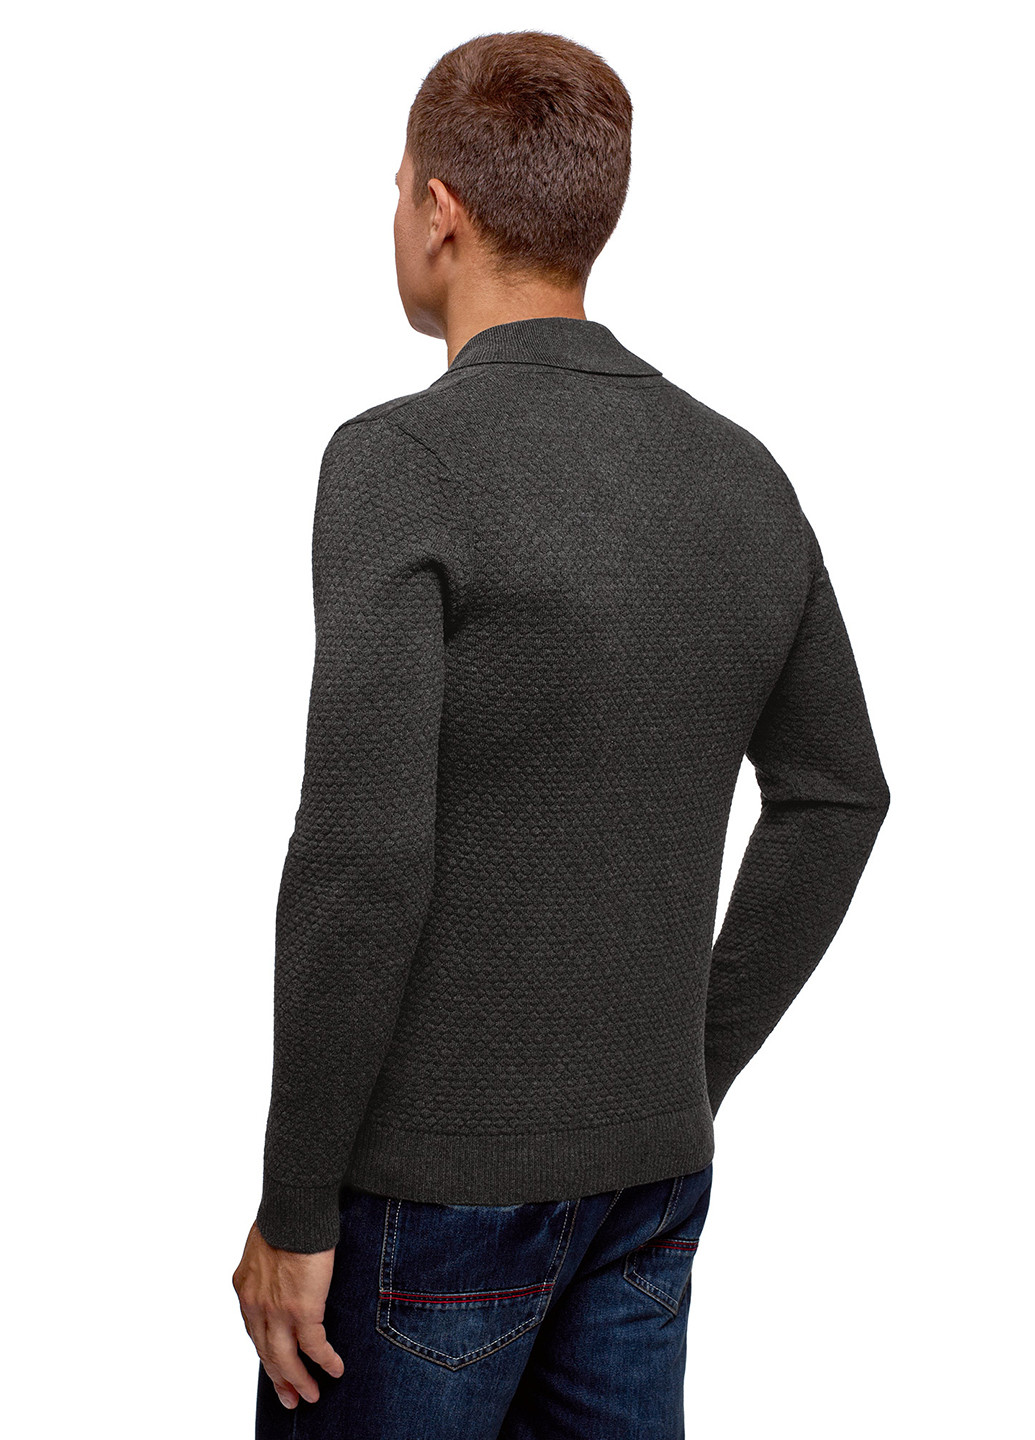 Темно-серый демисезонный пуловер пуловер Oodji